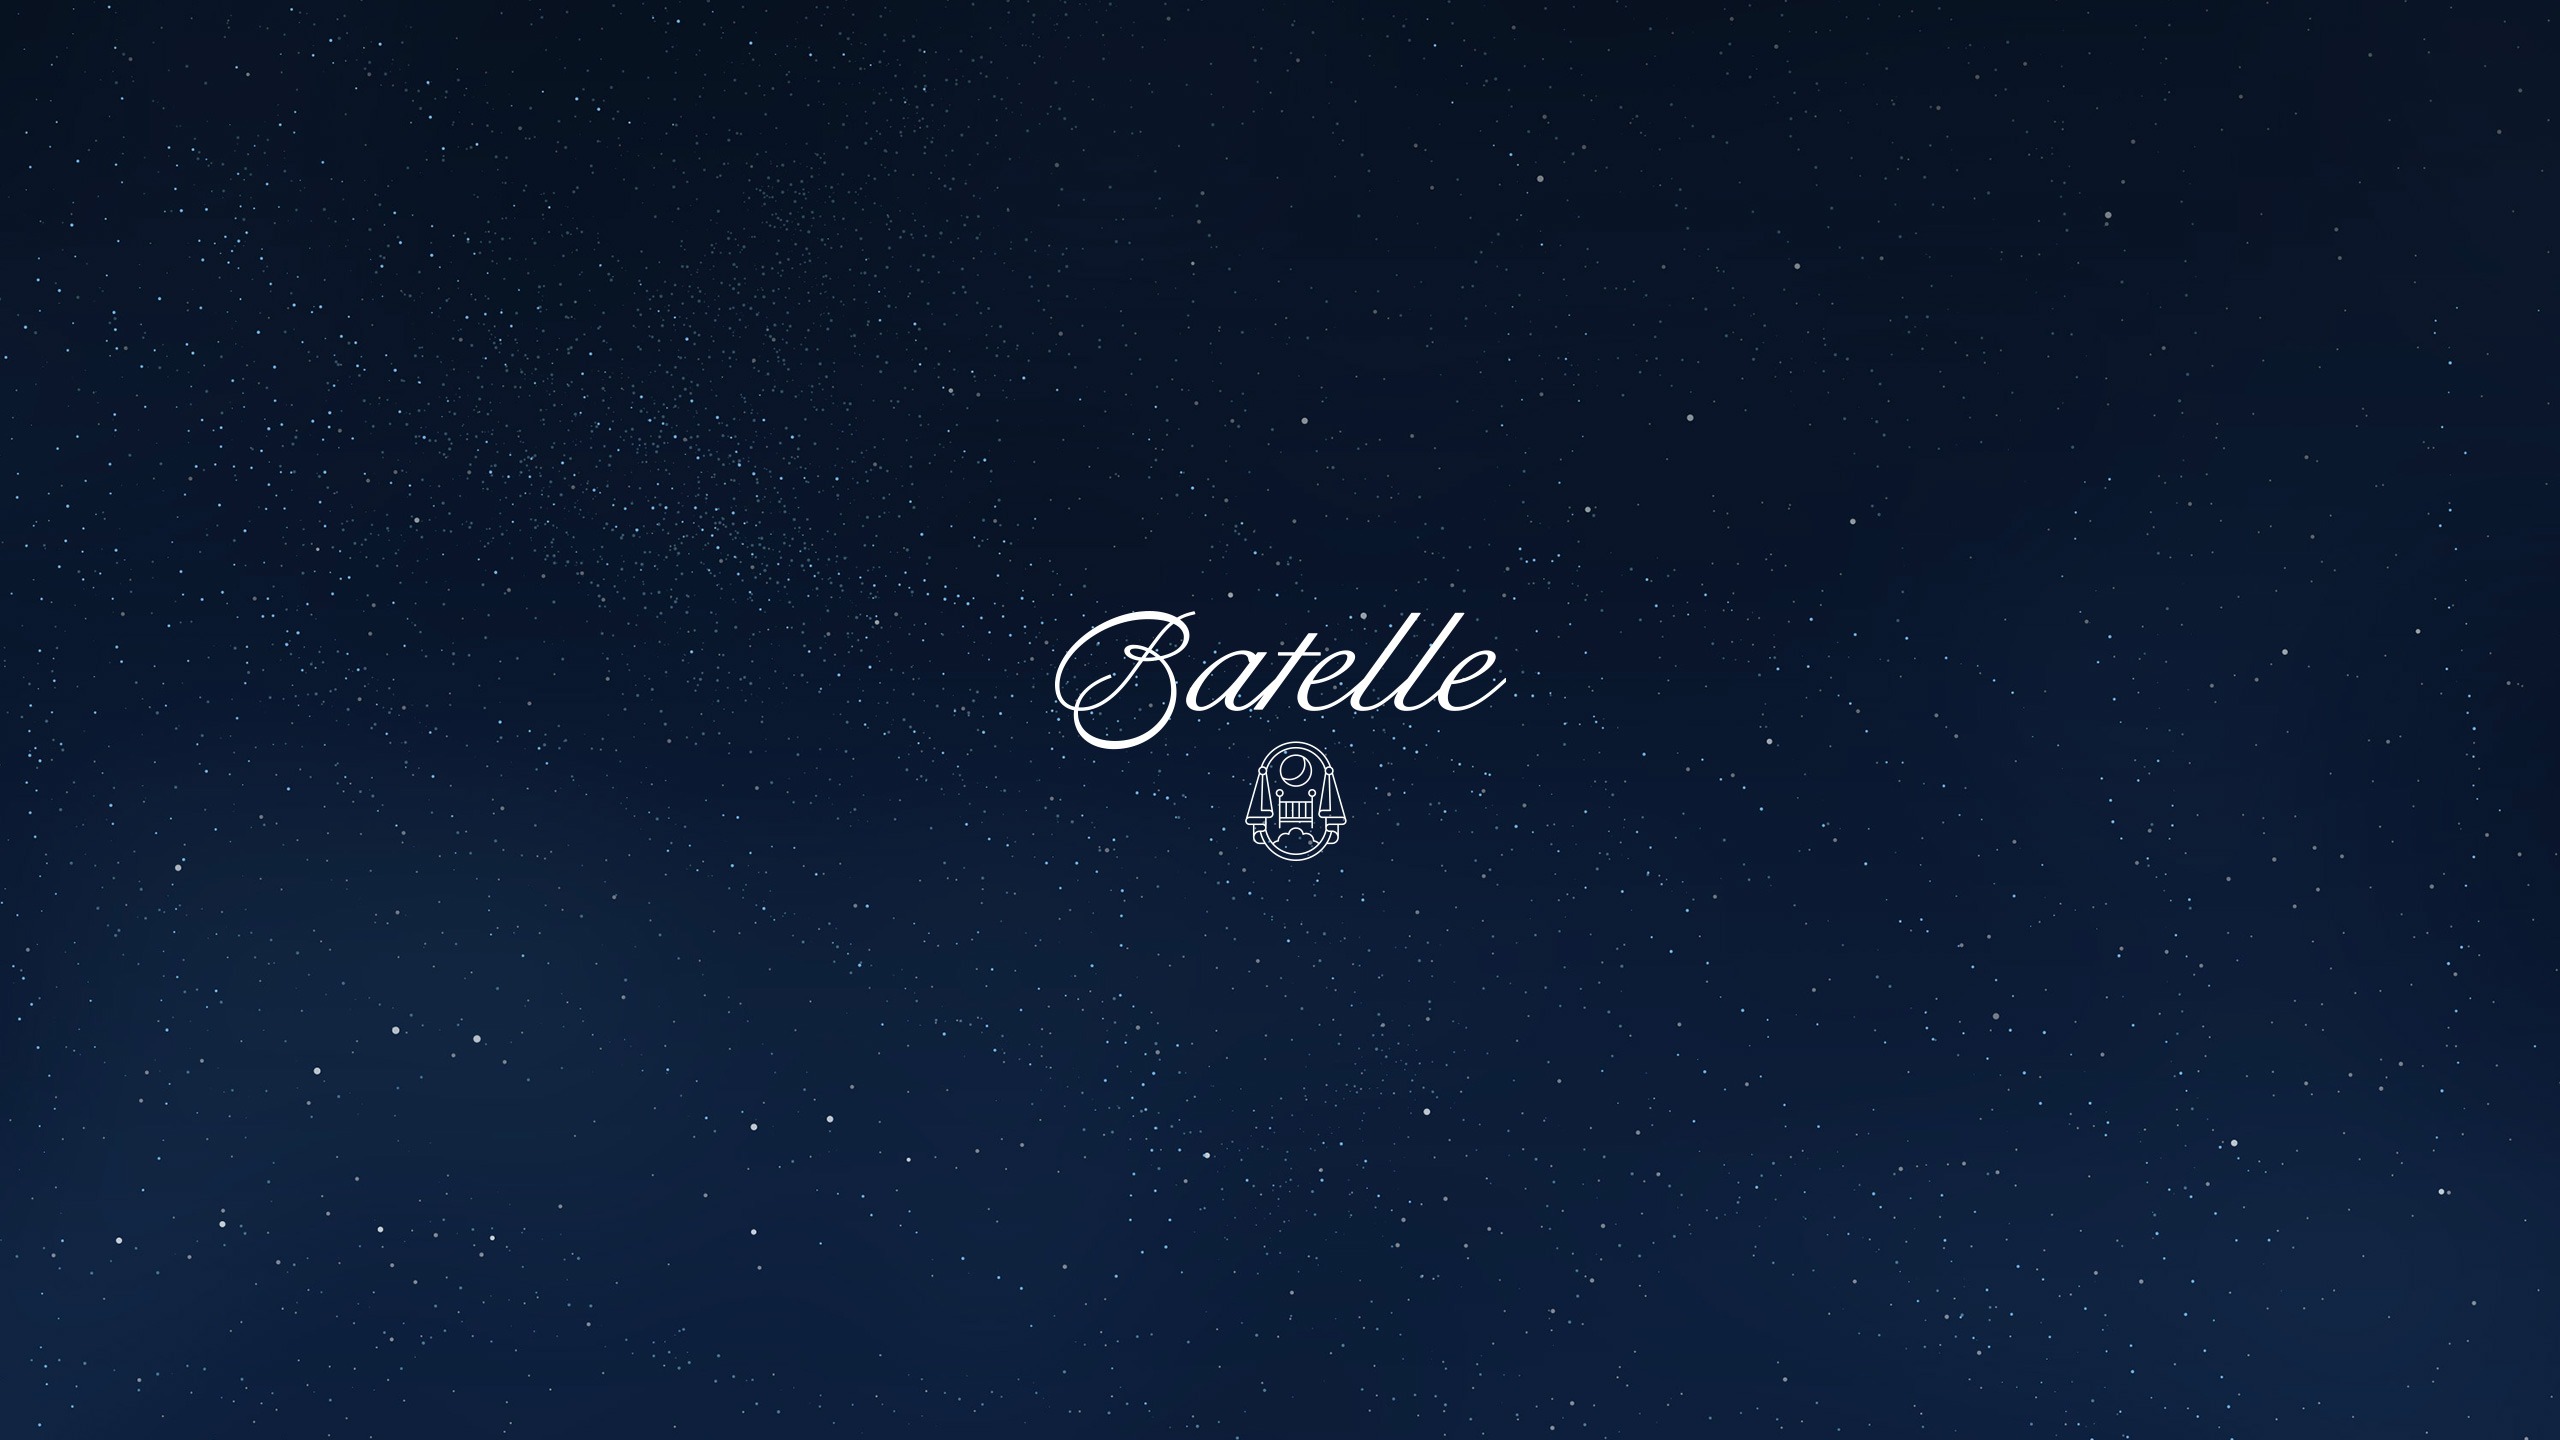 Batelle logo